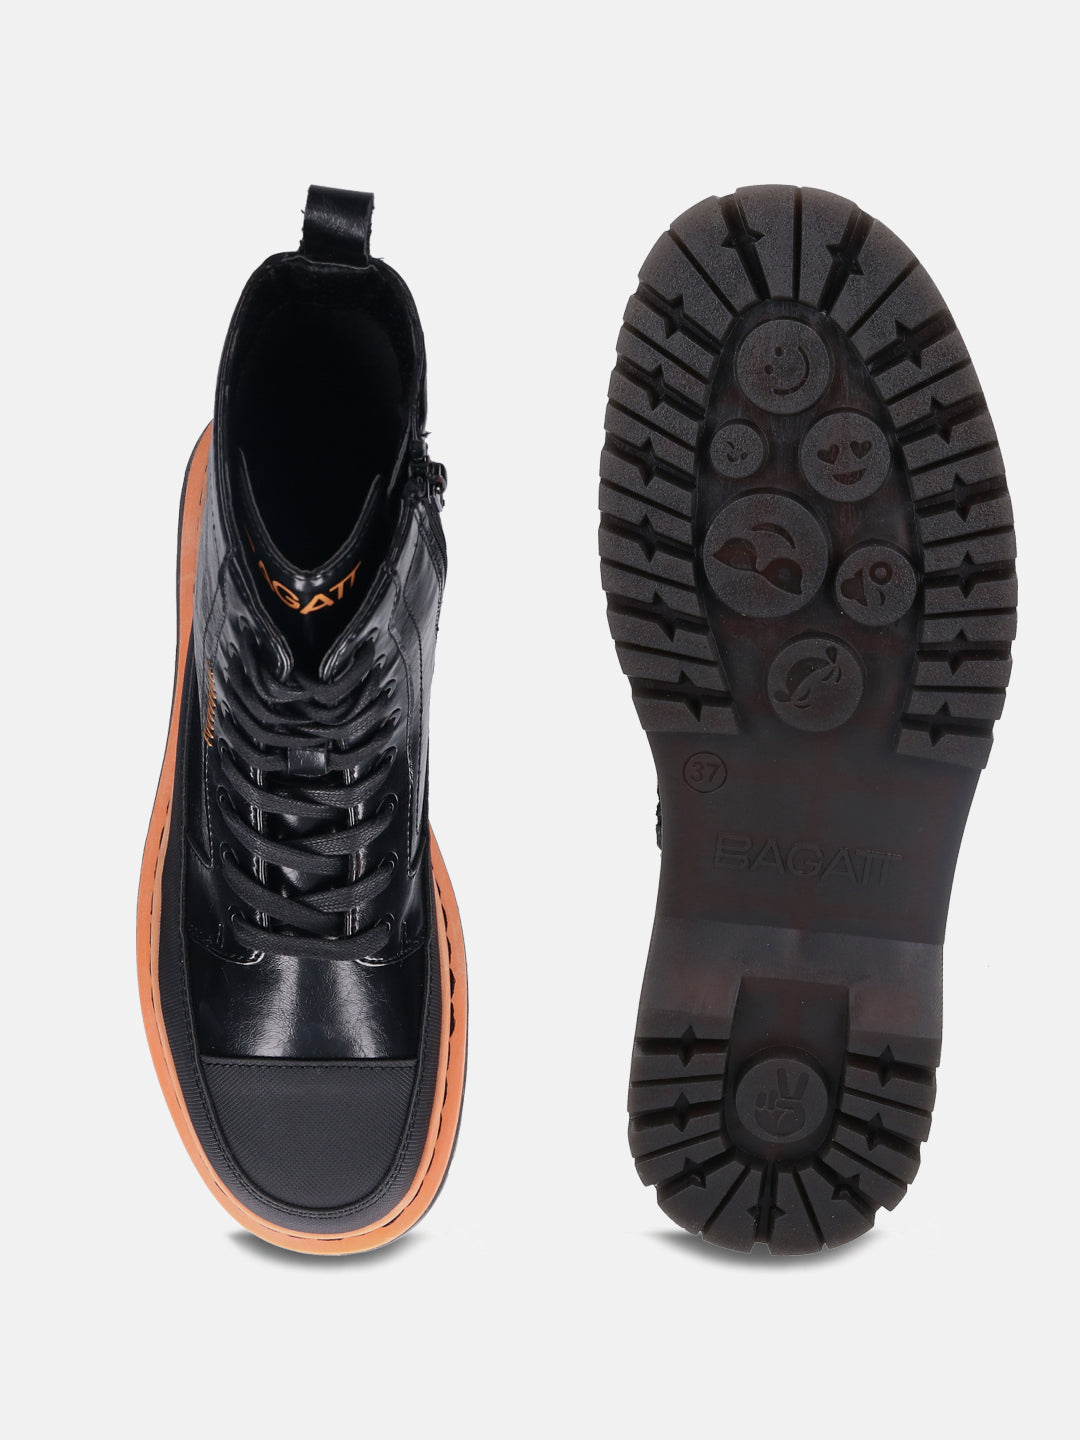 Big Black & Orange Ankle Boots - BAGATT